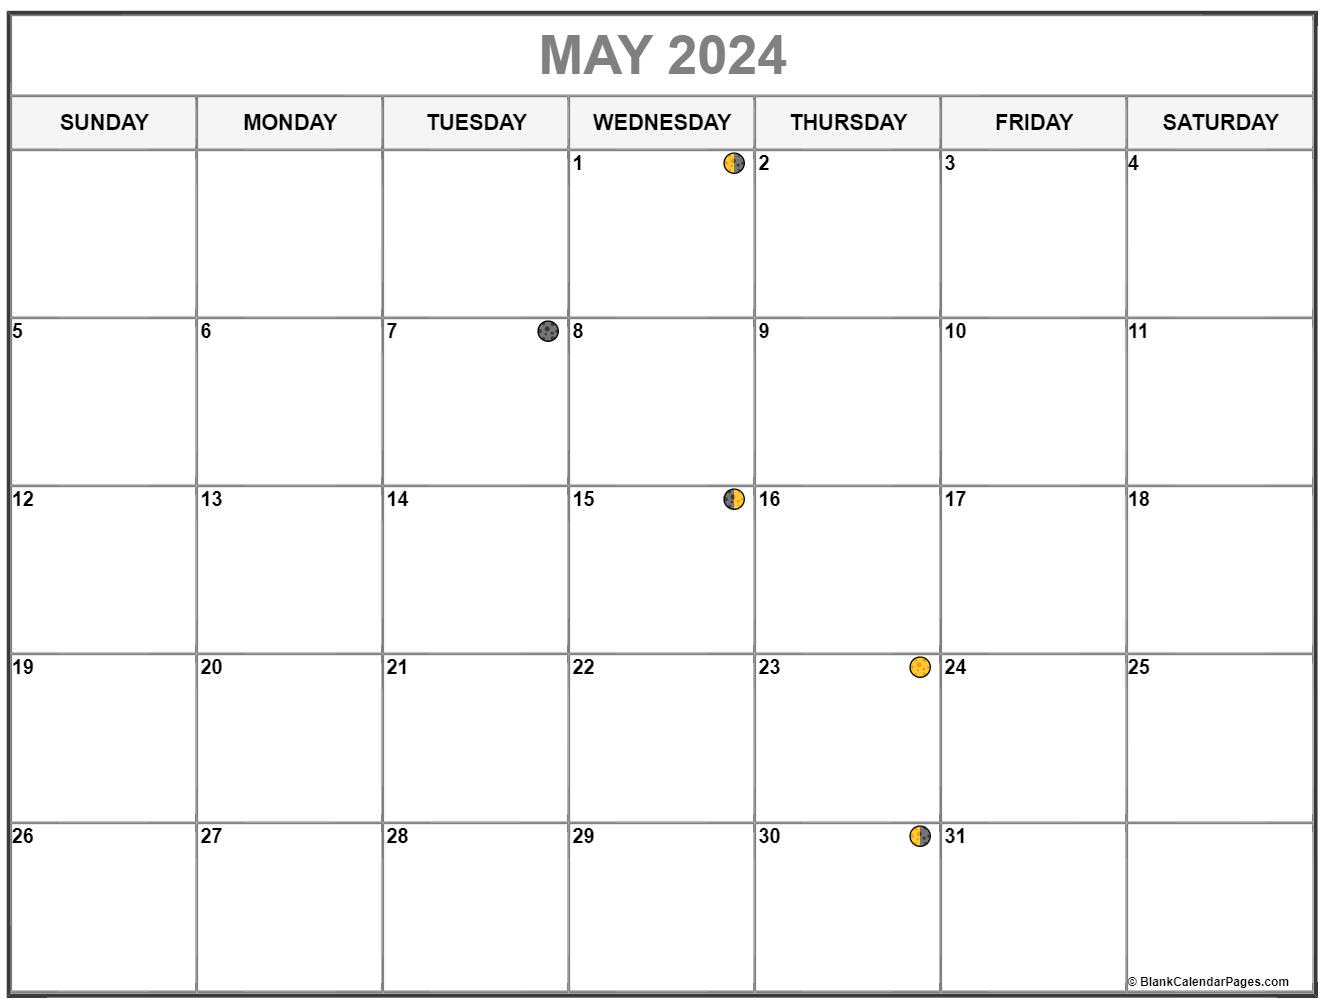 May 2021 Lunar Calendar | Moon Phase Calendar